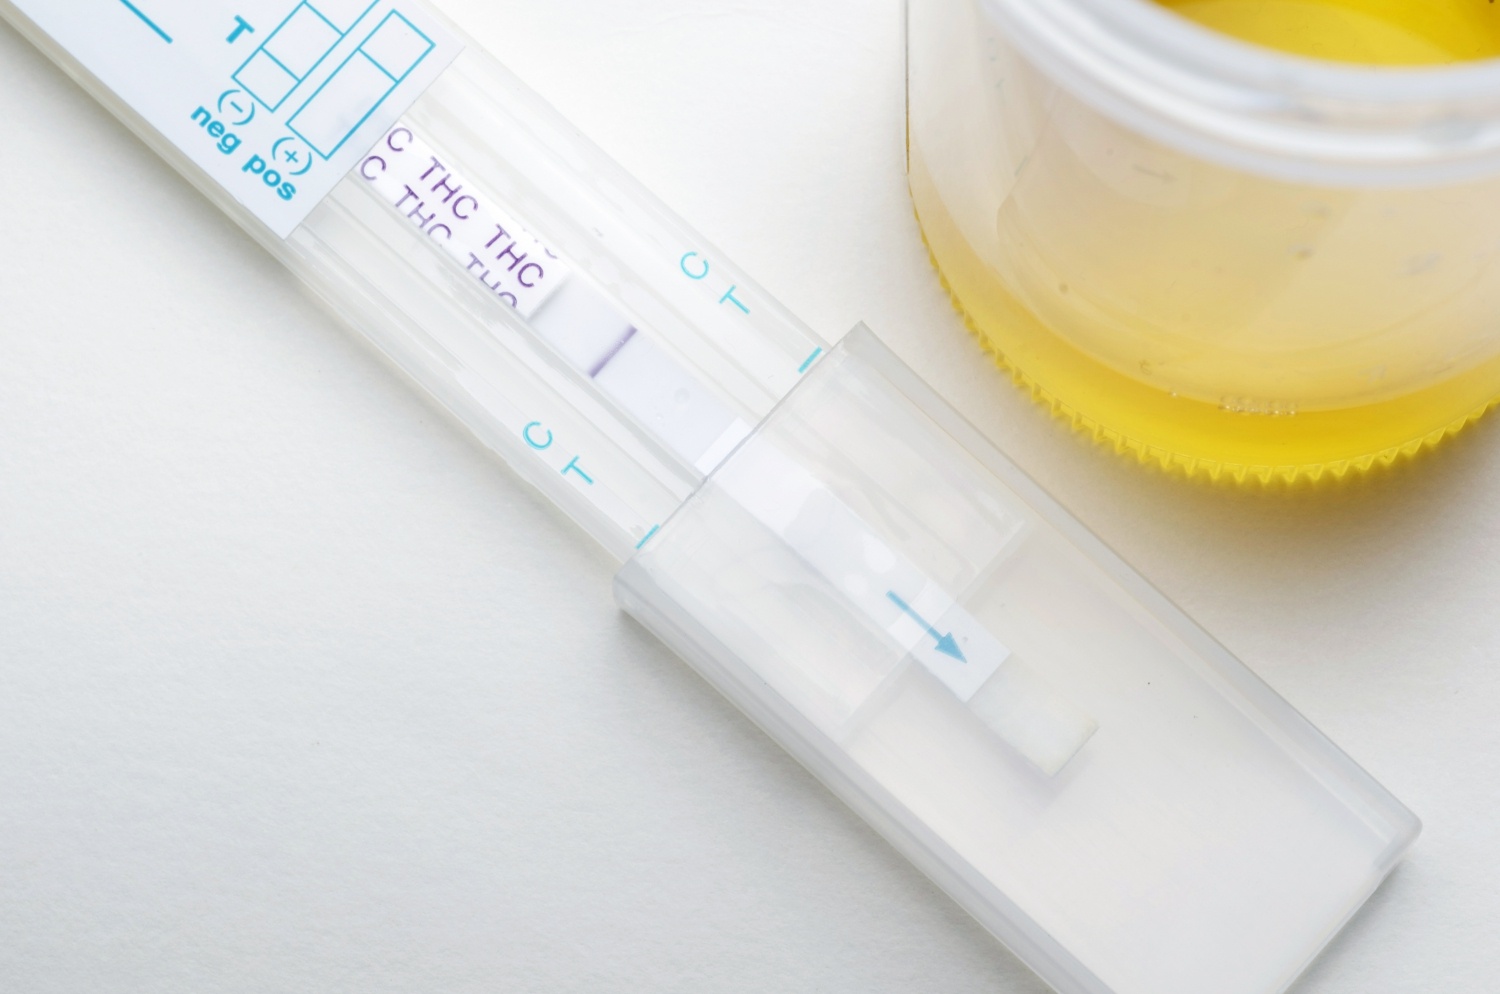 Urine Drug Test in workplace